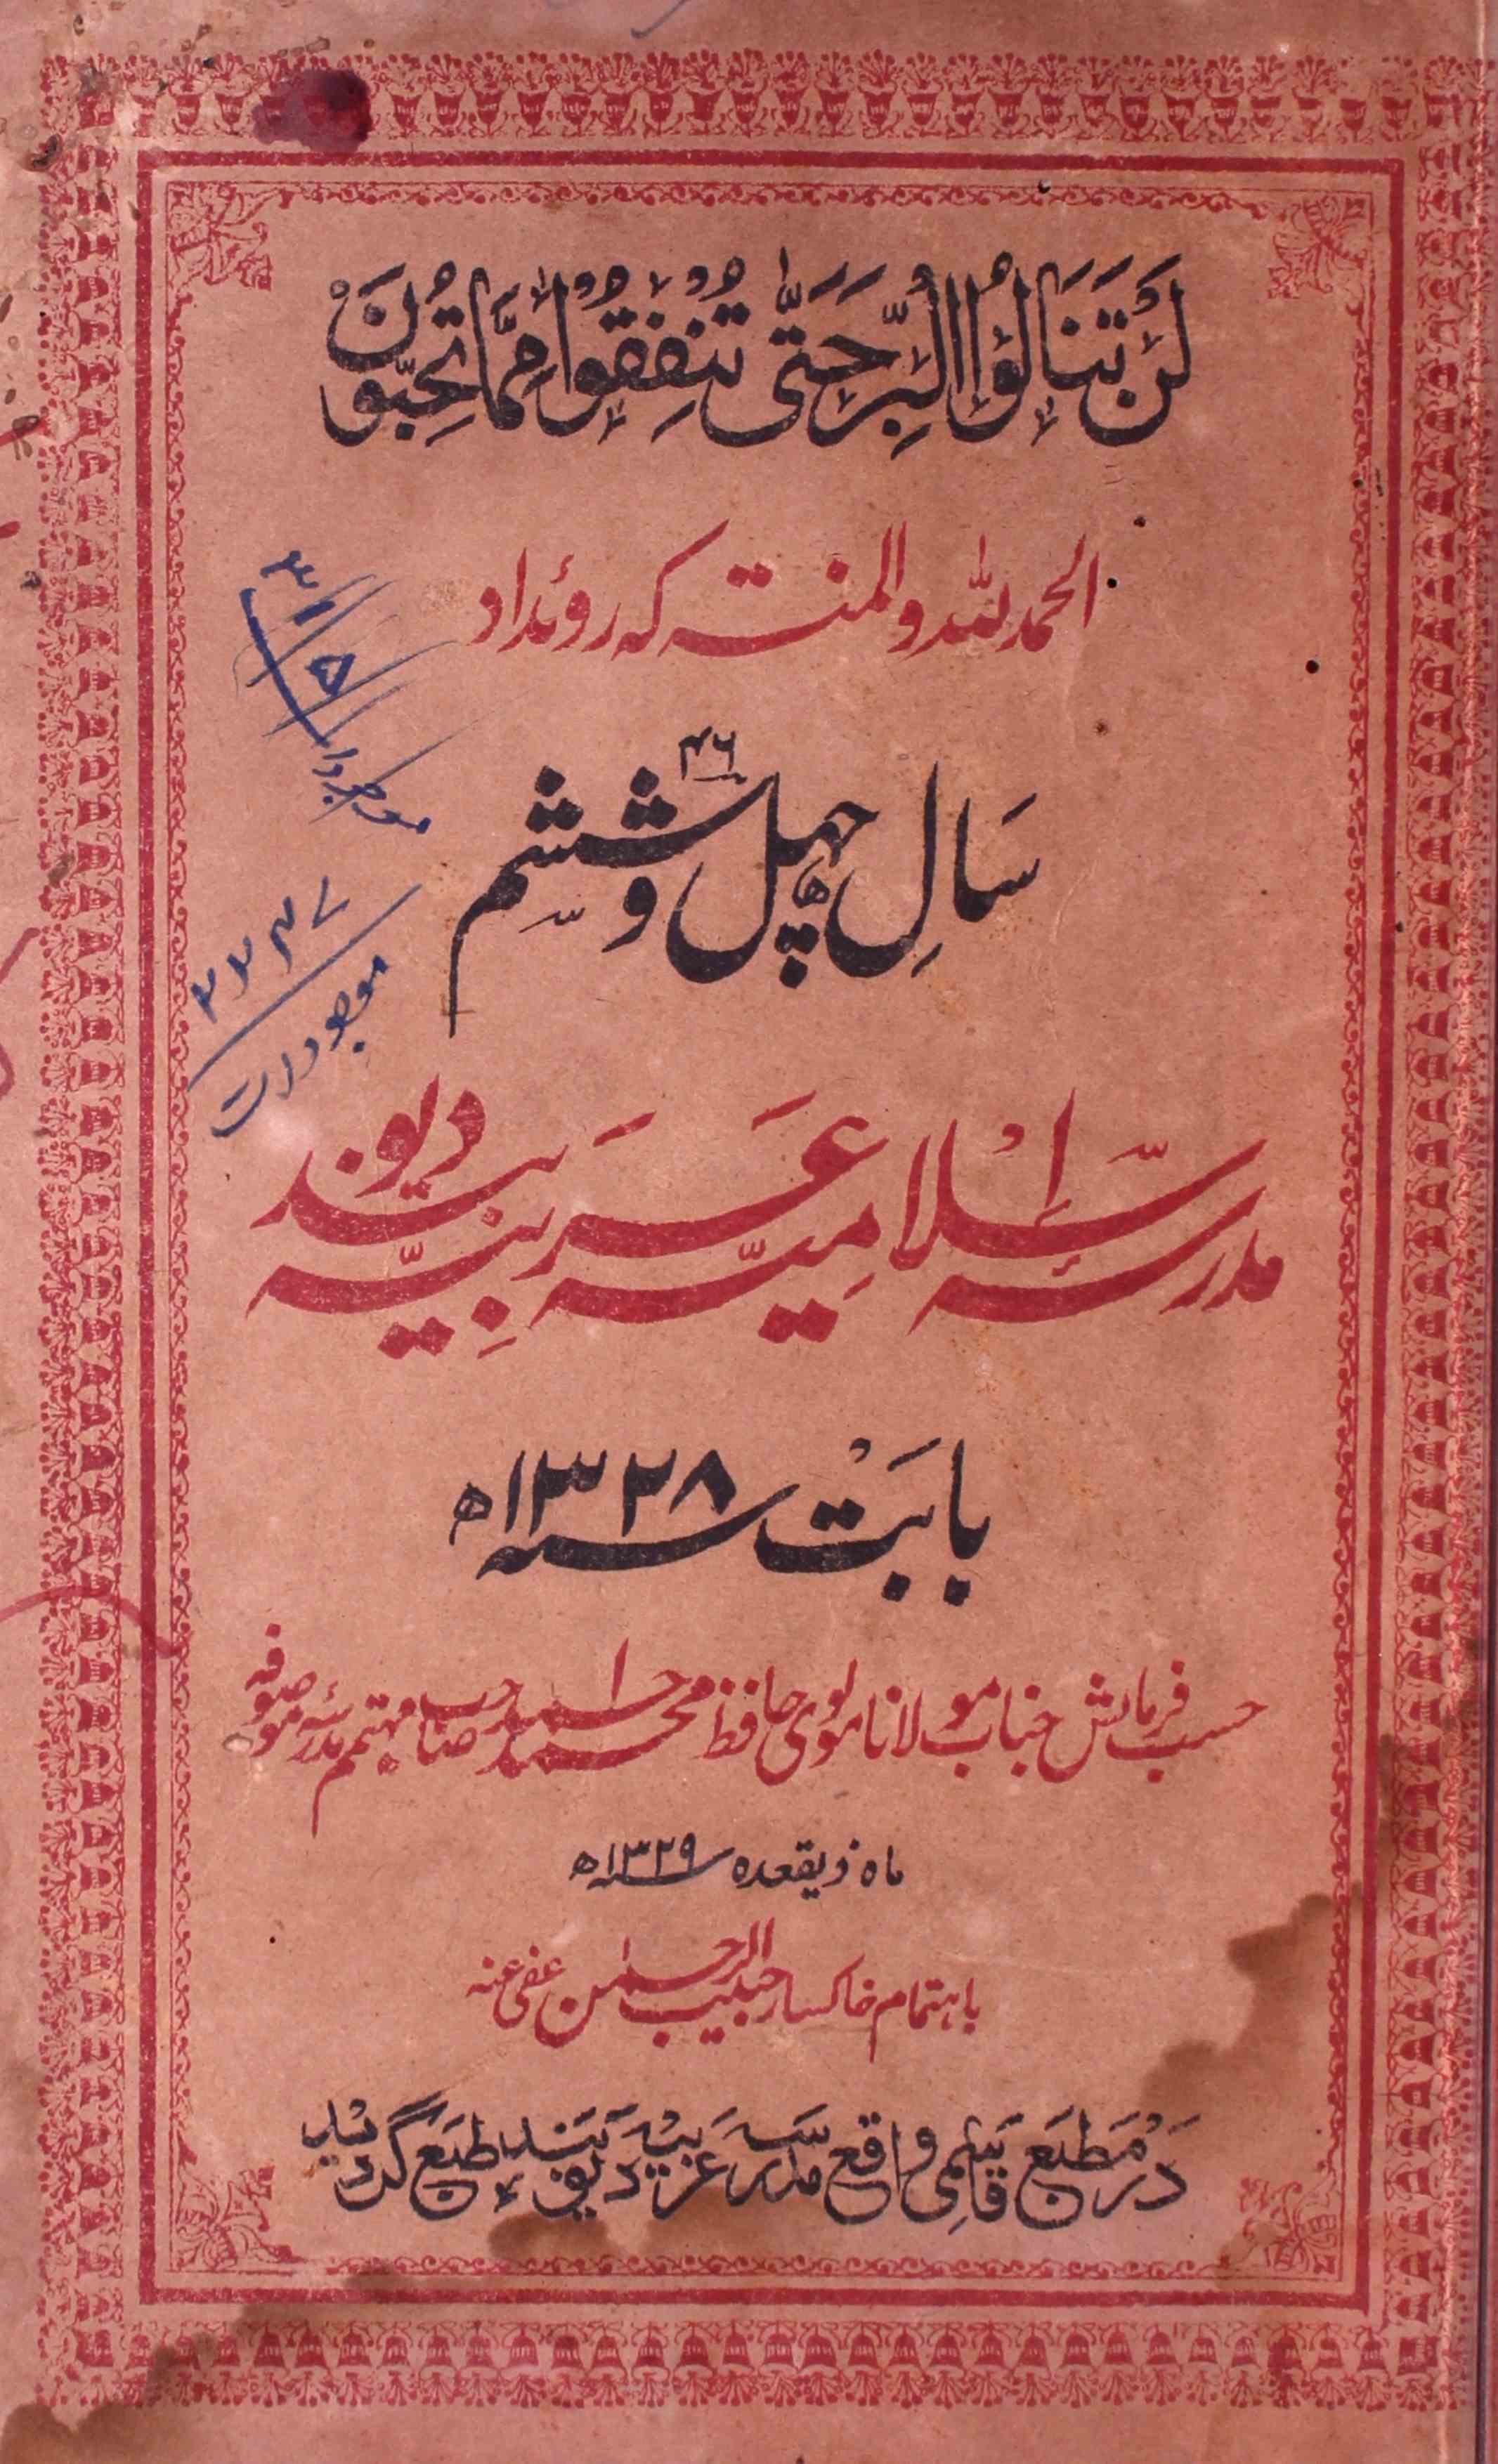 Rudad Madrasa Islamia Arabia Deoband - sal 46 1328 hijri